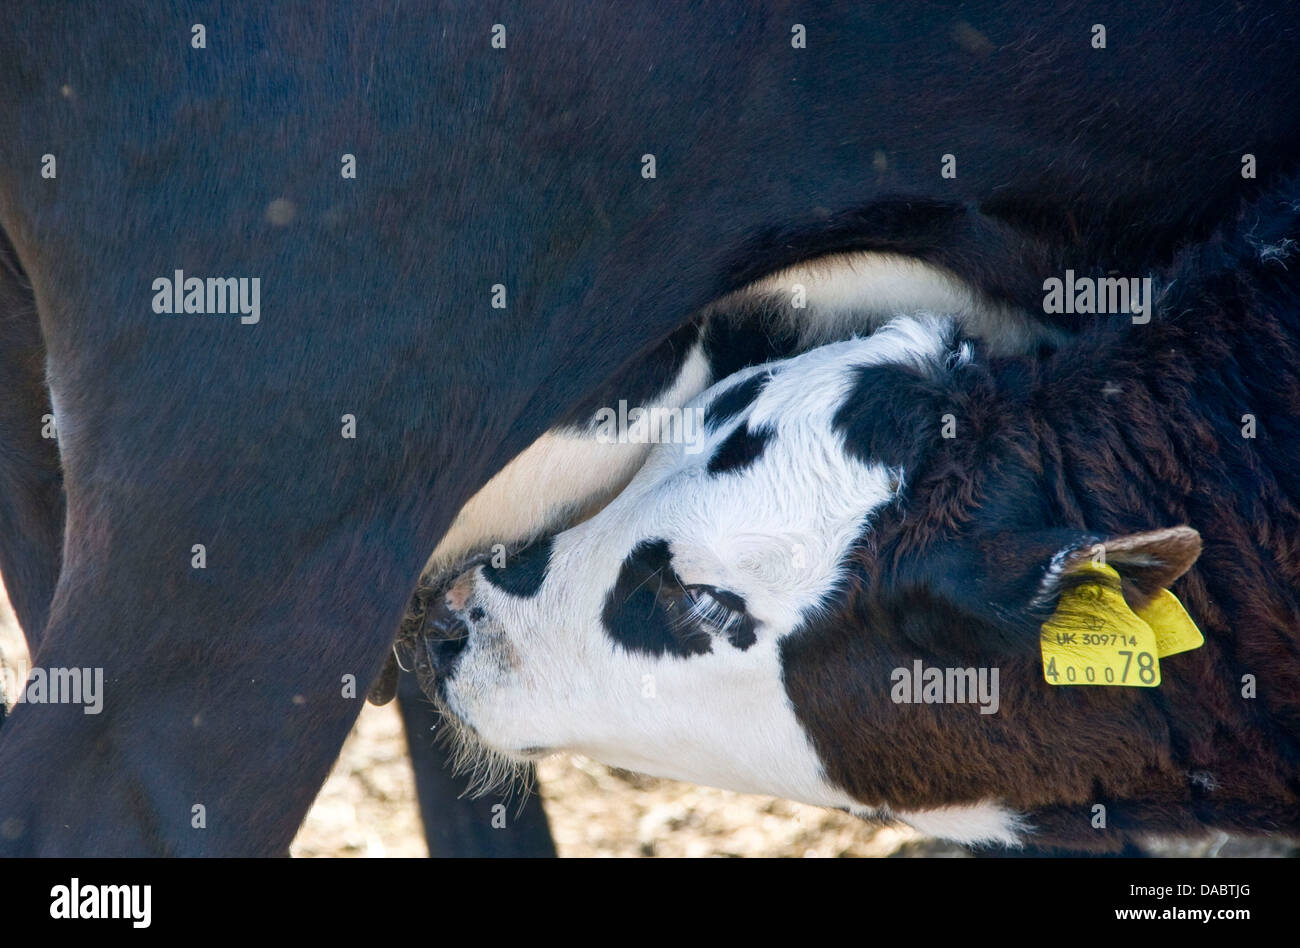 Cattle farm animals calf suckling drinking from cows udder teat Malvern Hills Worcestershire England Europe Stock Photo